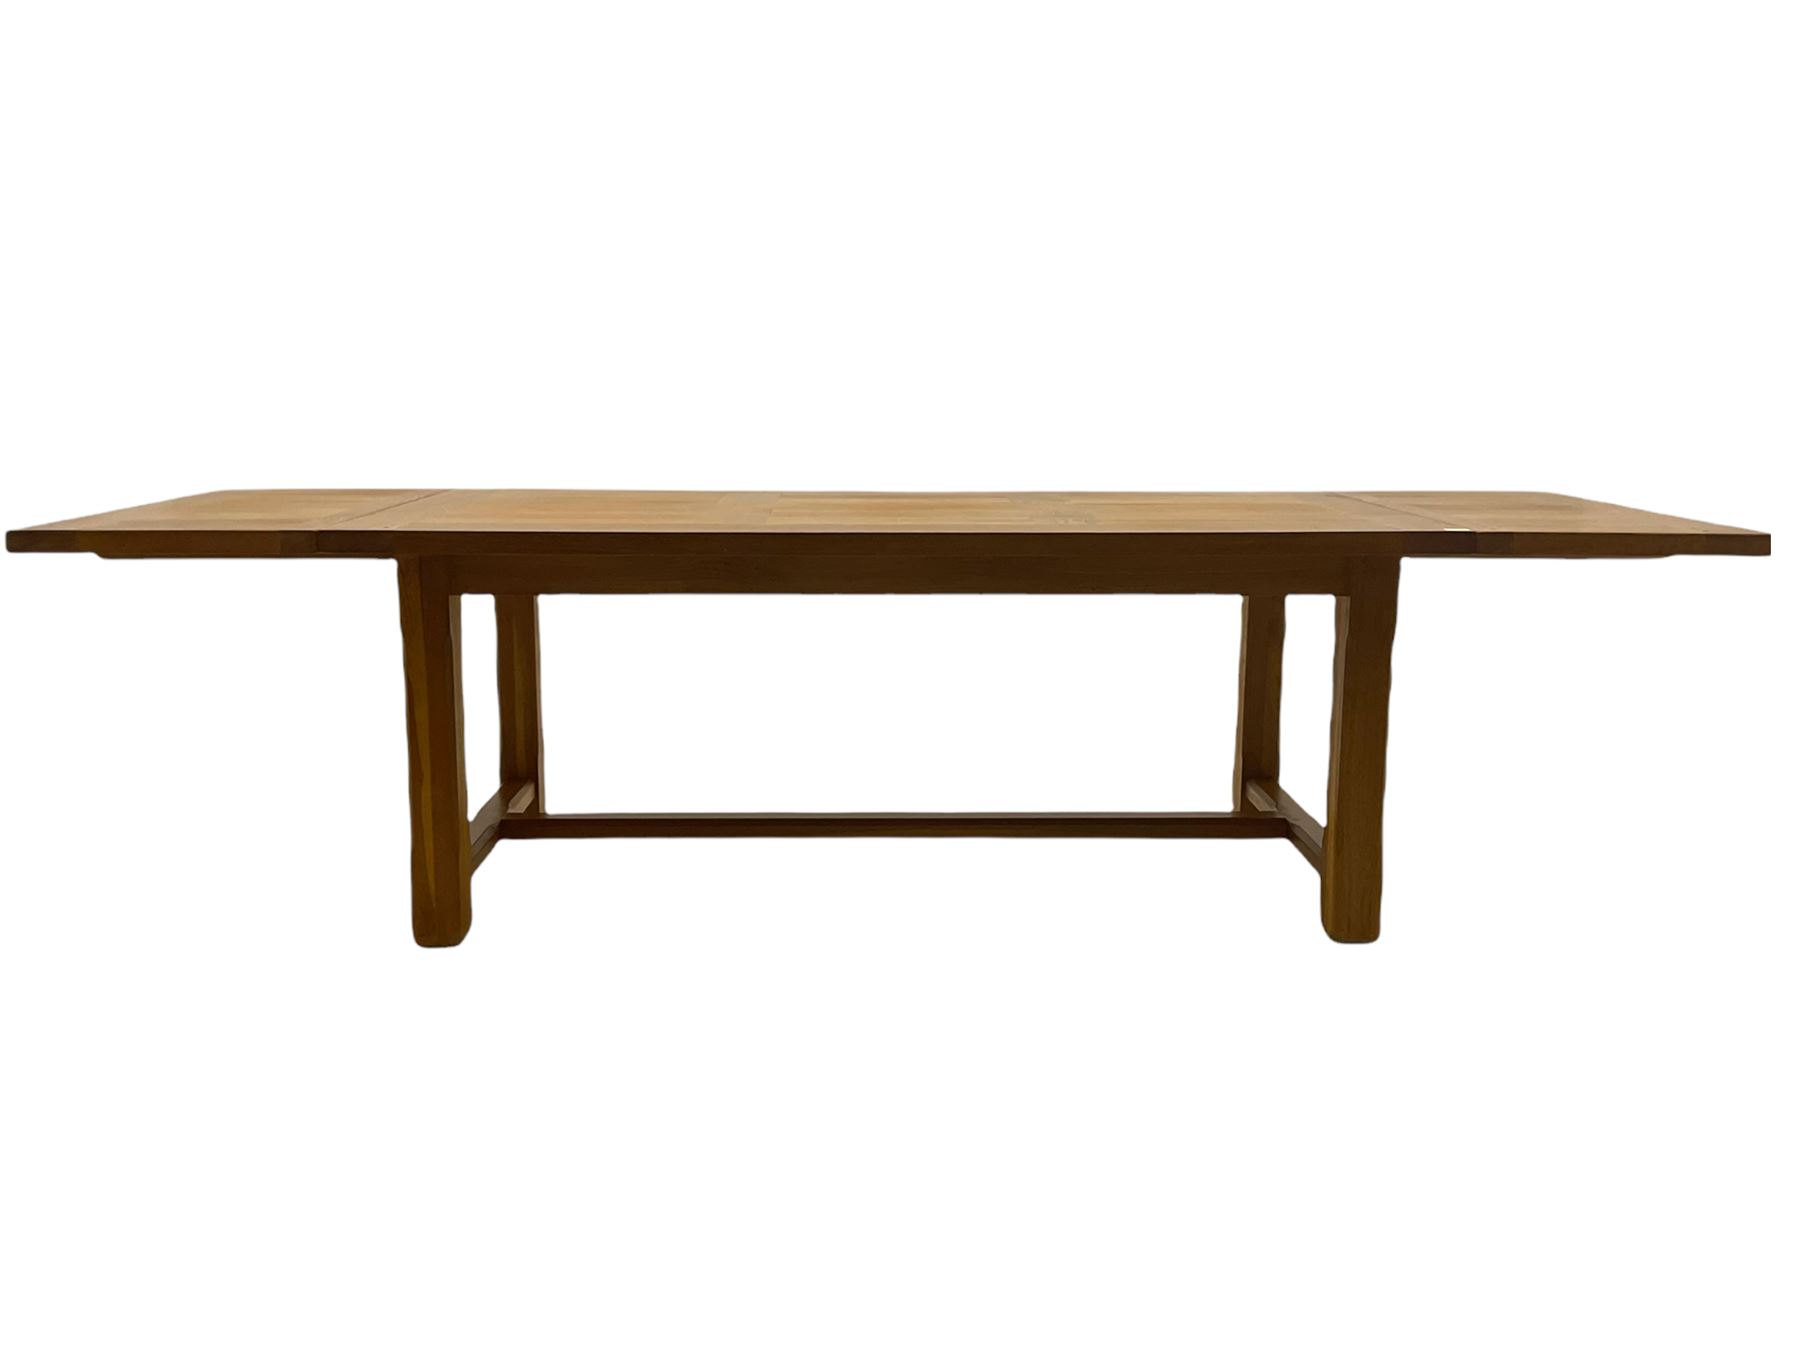 Manor Oak - light oak rectangular dining table